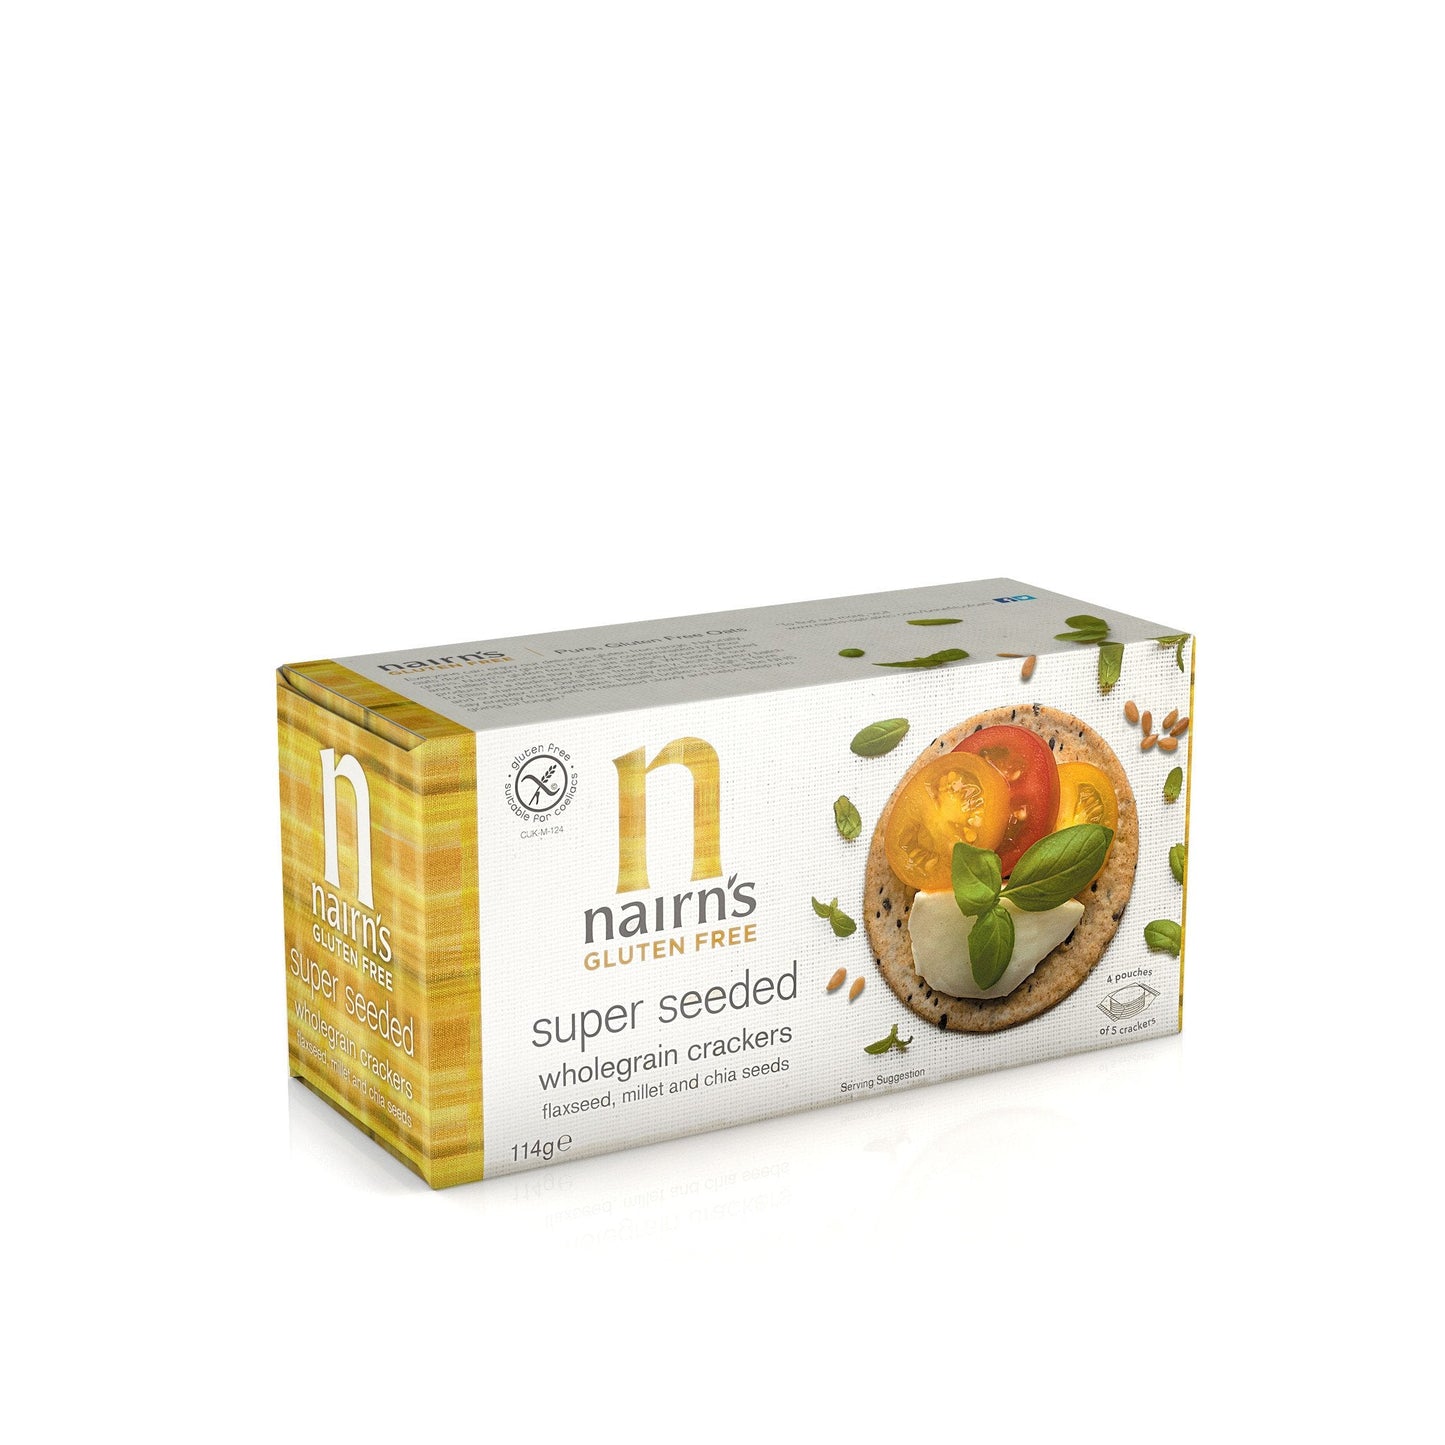 Nairns Gluten Free Super Seeded Wholegrain Cracker 114g - Just Natural